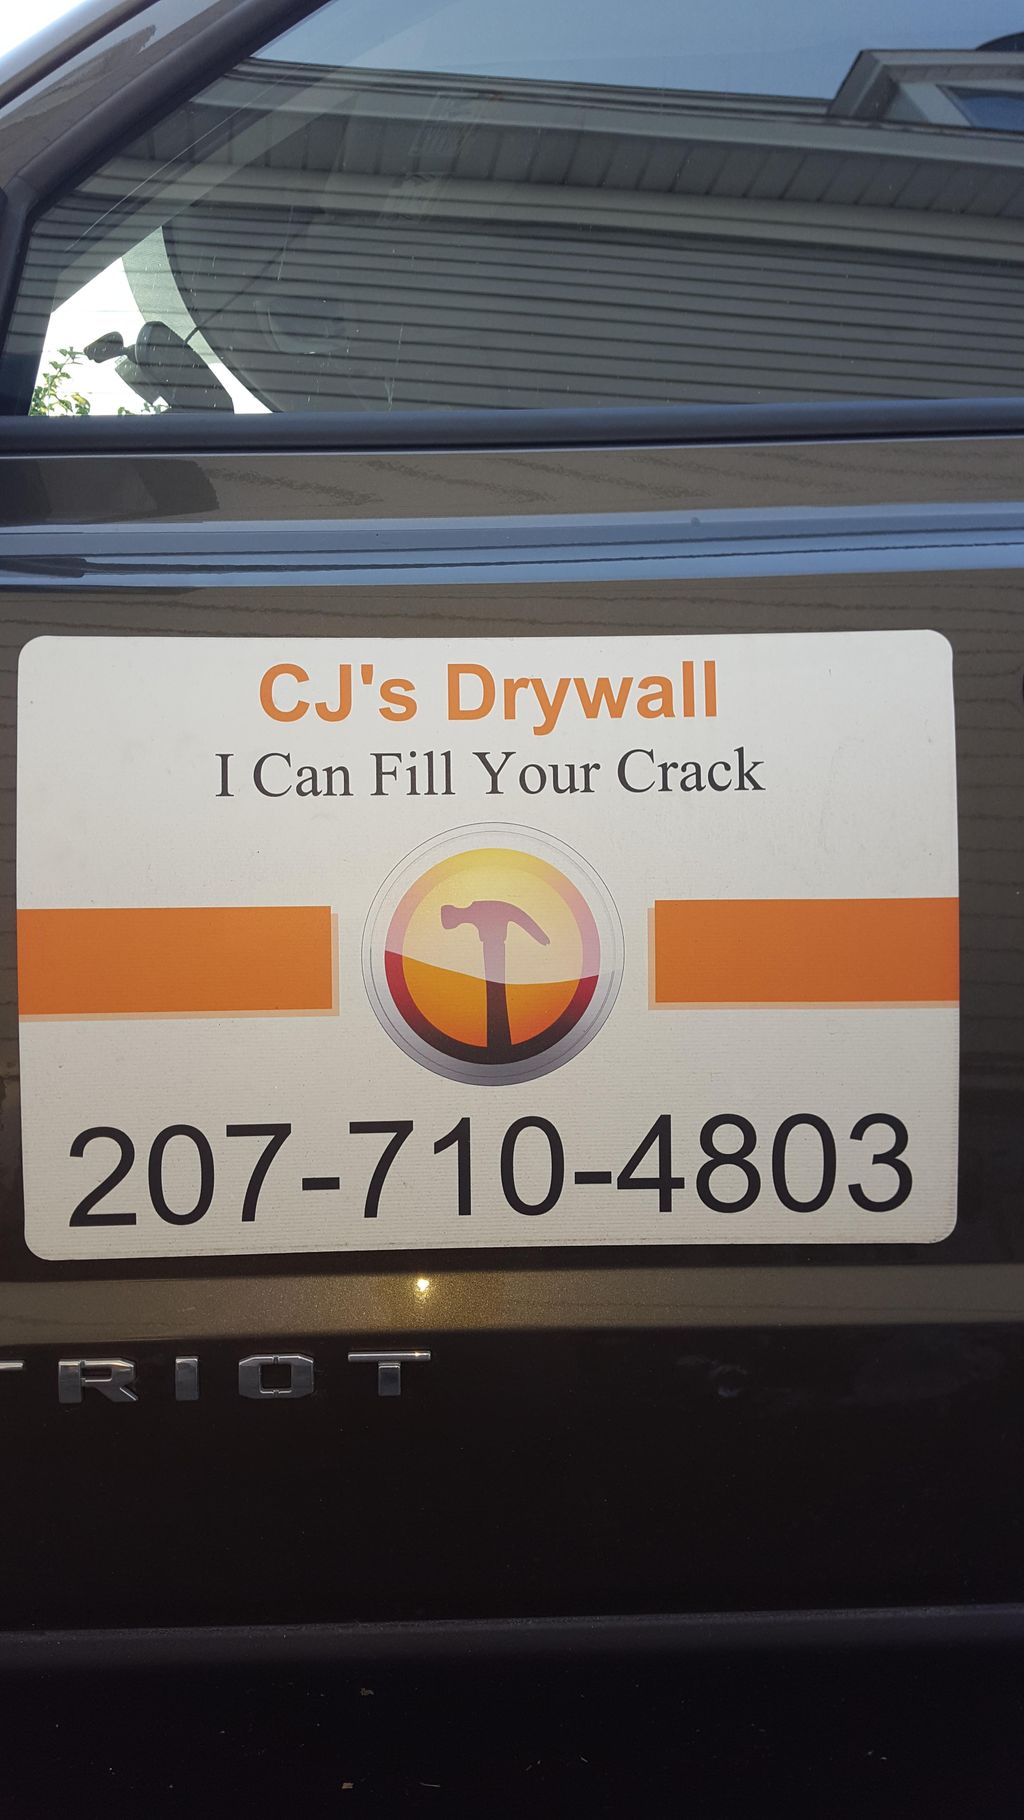 CJ's Drywall